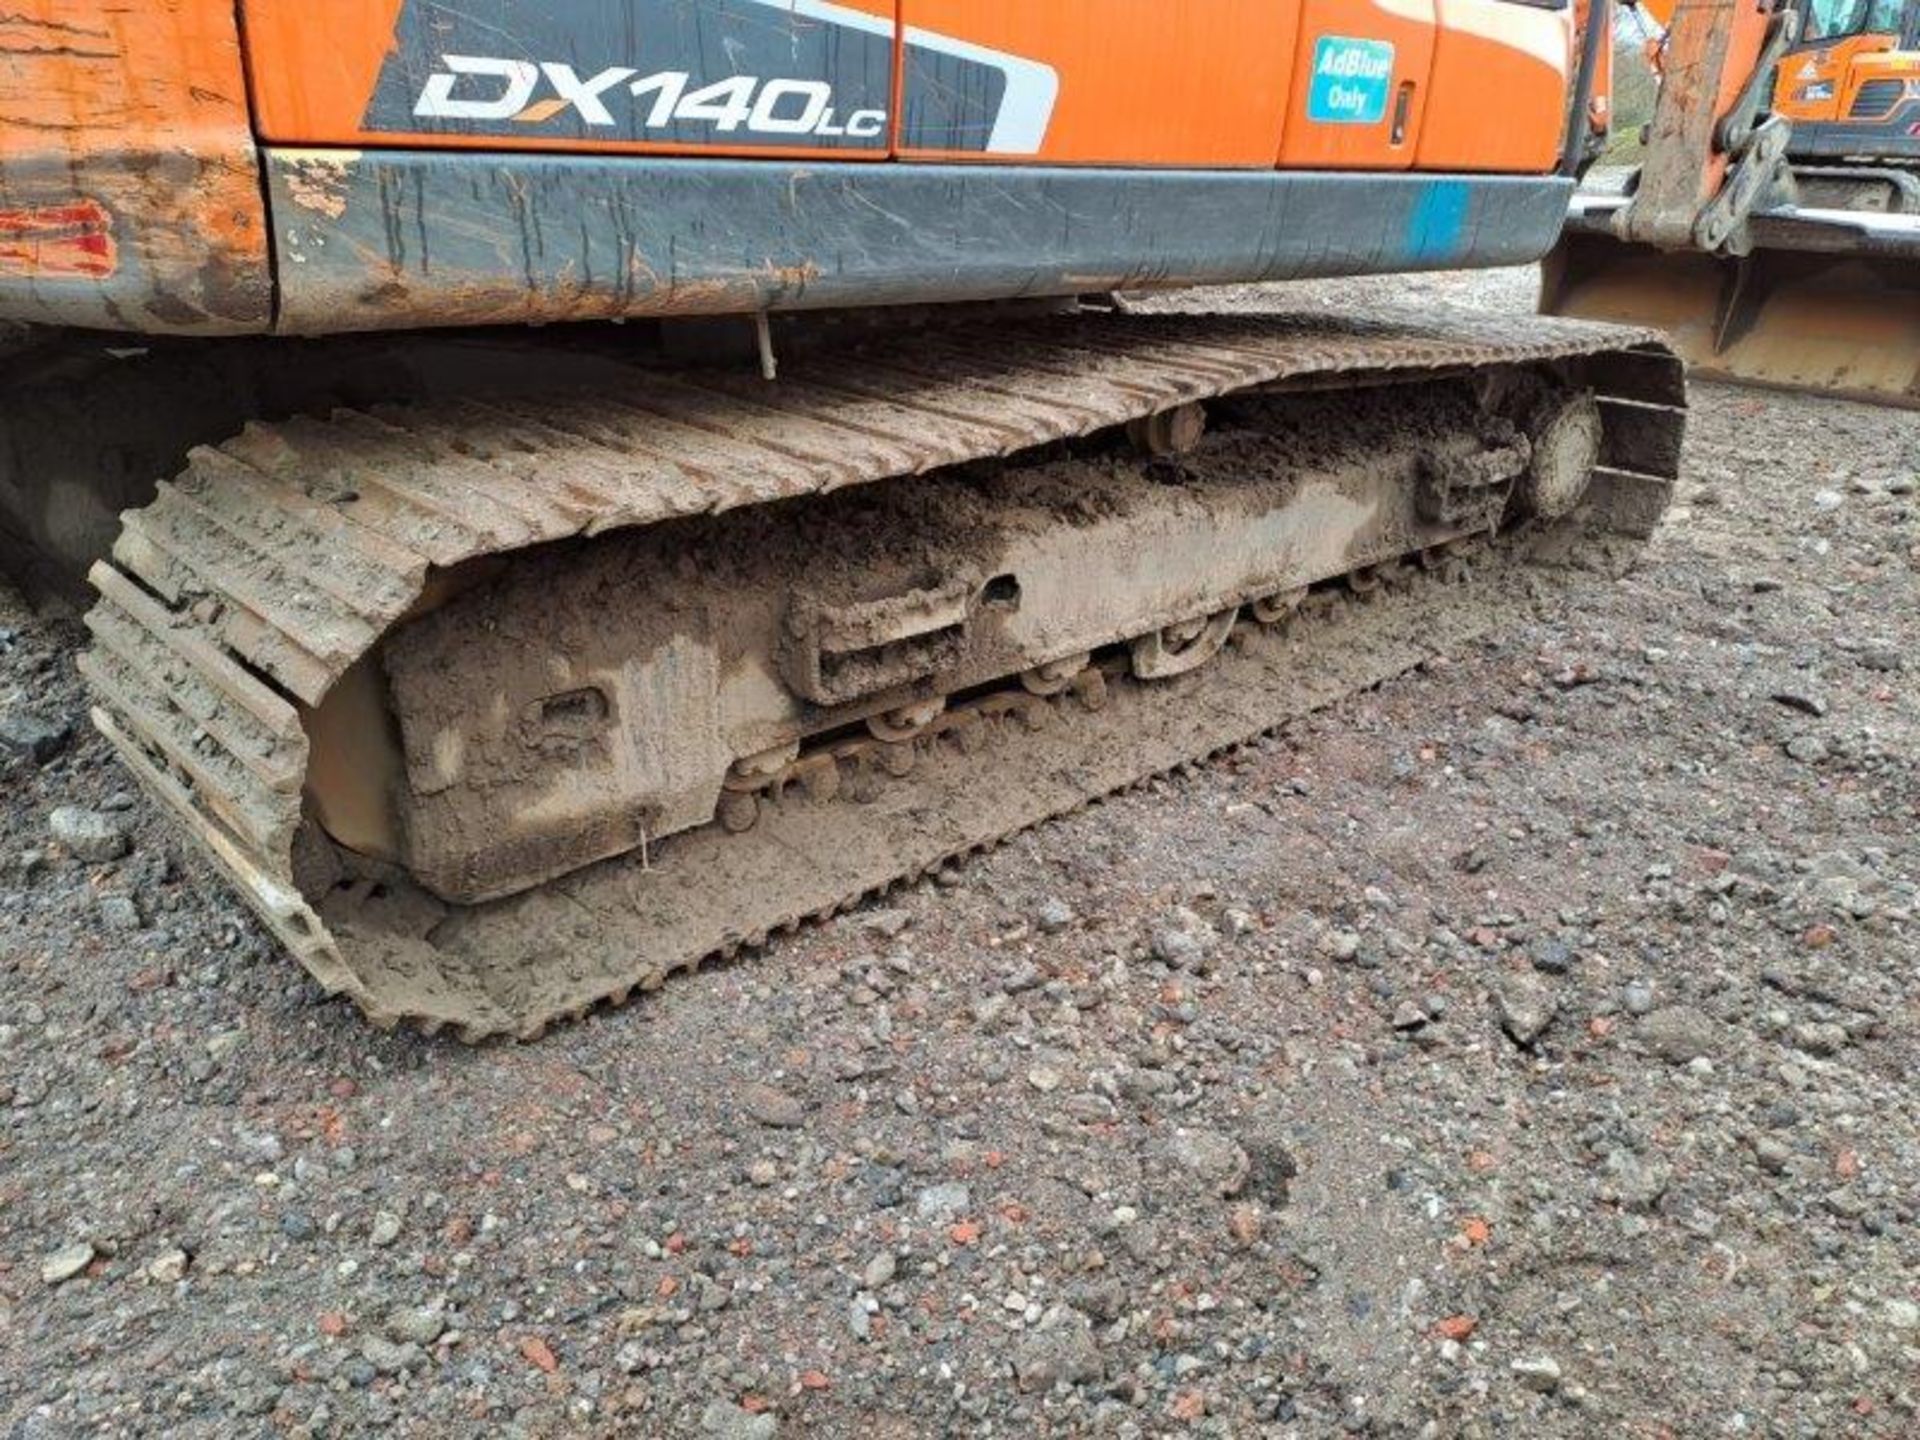 Doosan DX140LC-5 14t excavator, serial no. DXCCEBBREK0020165, Year: 2019, Hours: 4,687, Key: 1, with - Image 11 of 22